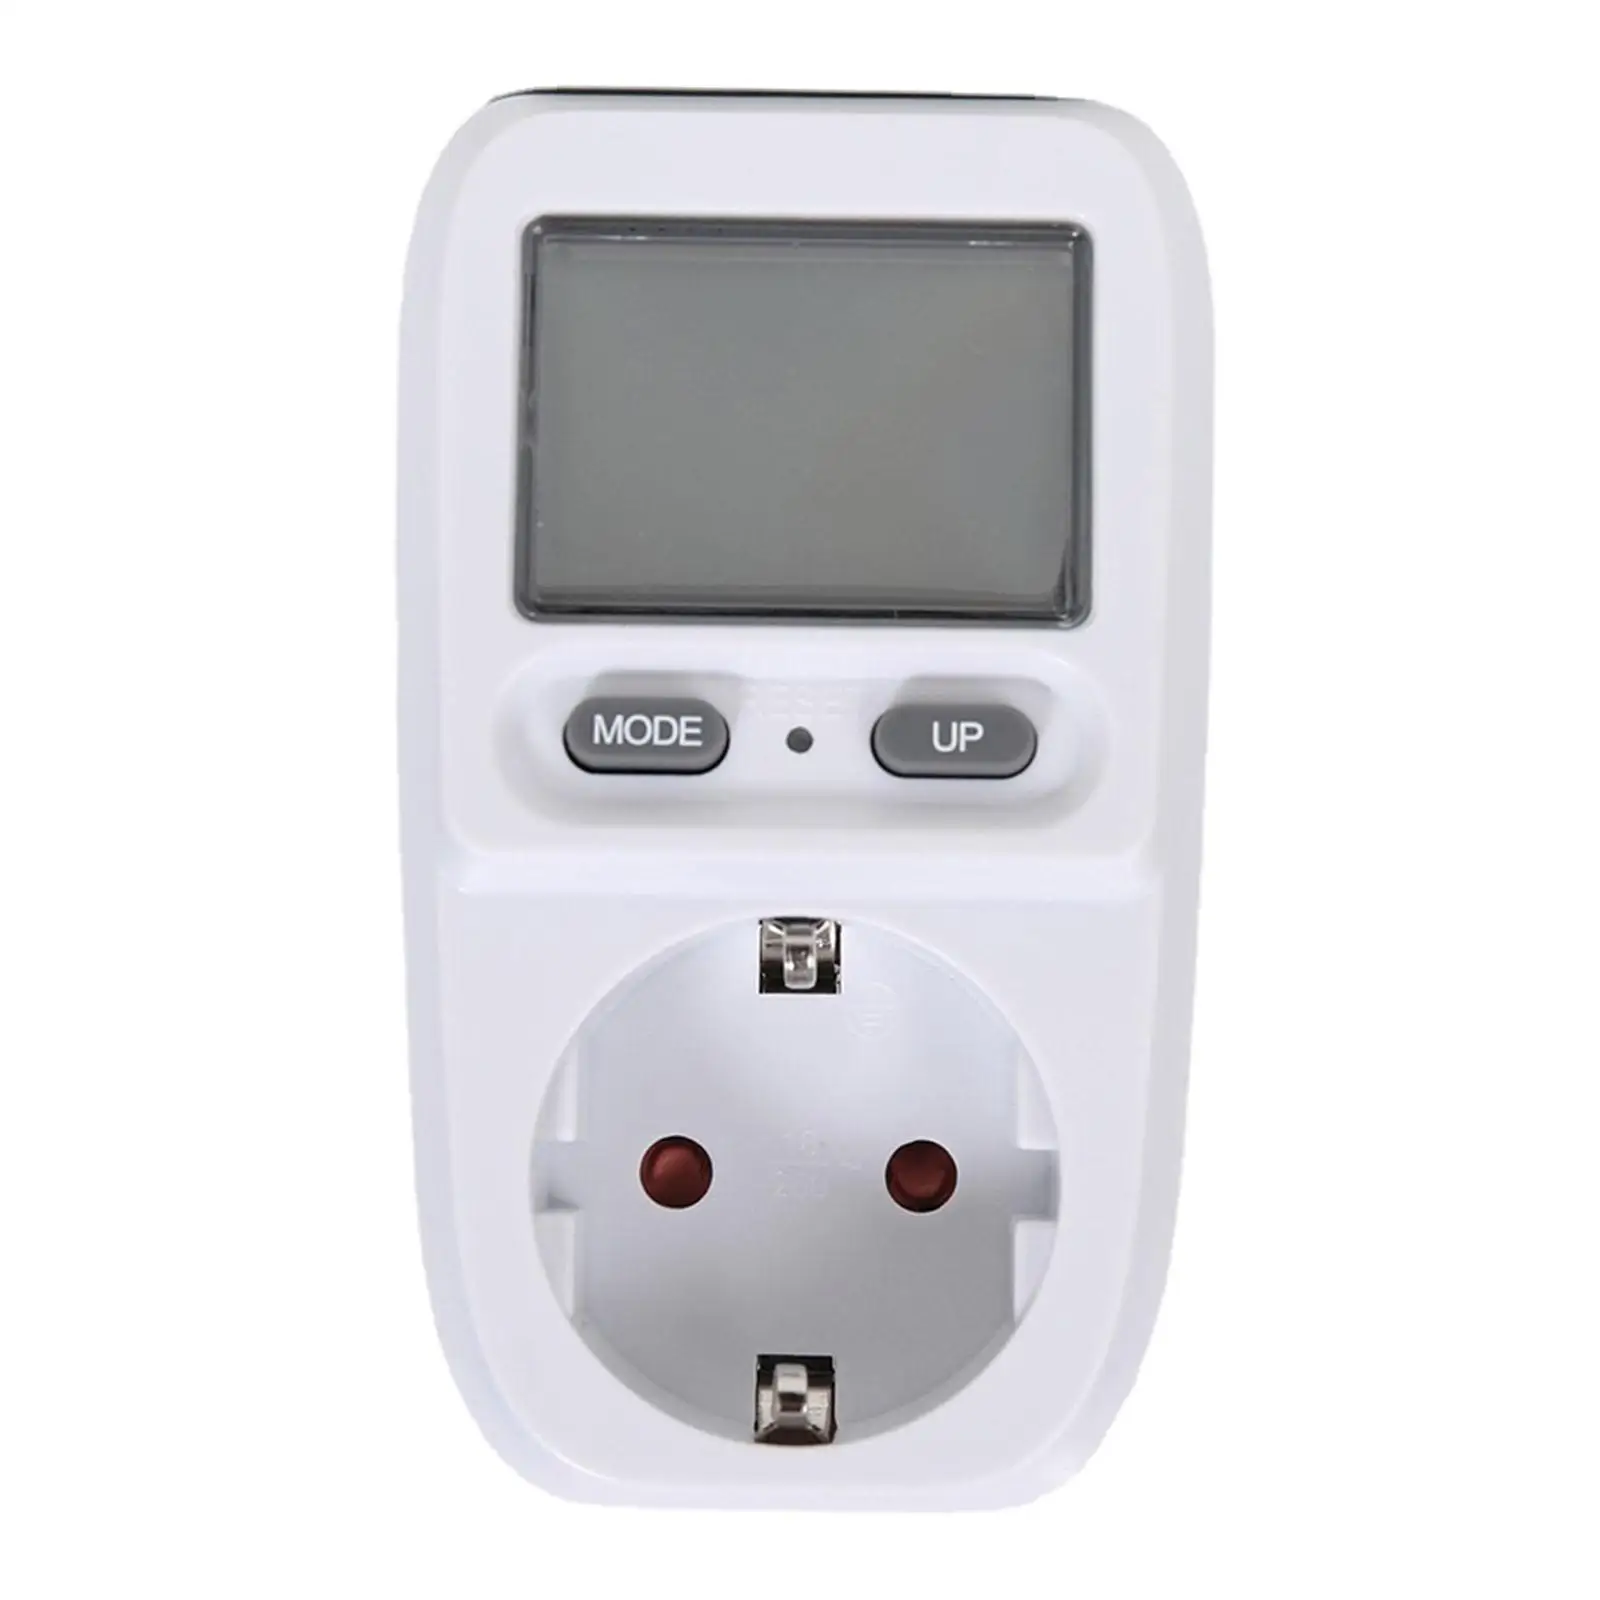 Monitor Power Backlit Watt Meter Wattmeter Digital Equipment Tester Low Cost Electricity Meter Monitor for Household 230V/16A